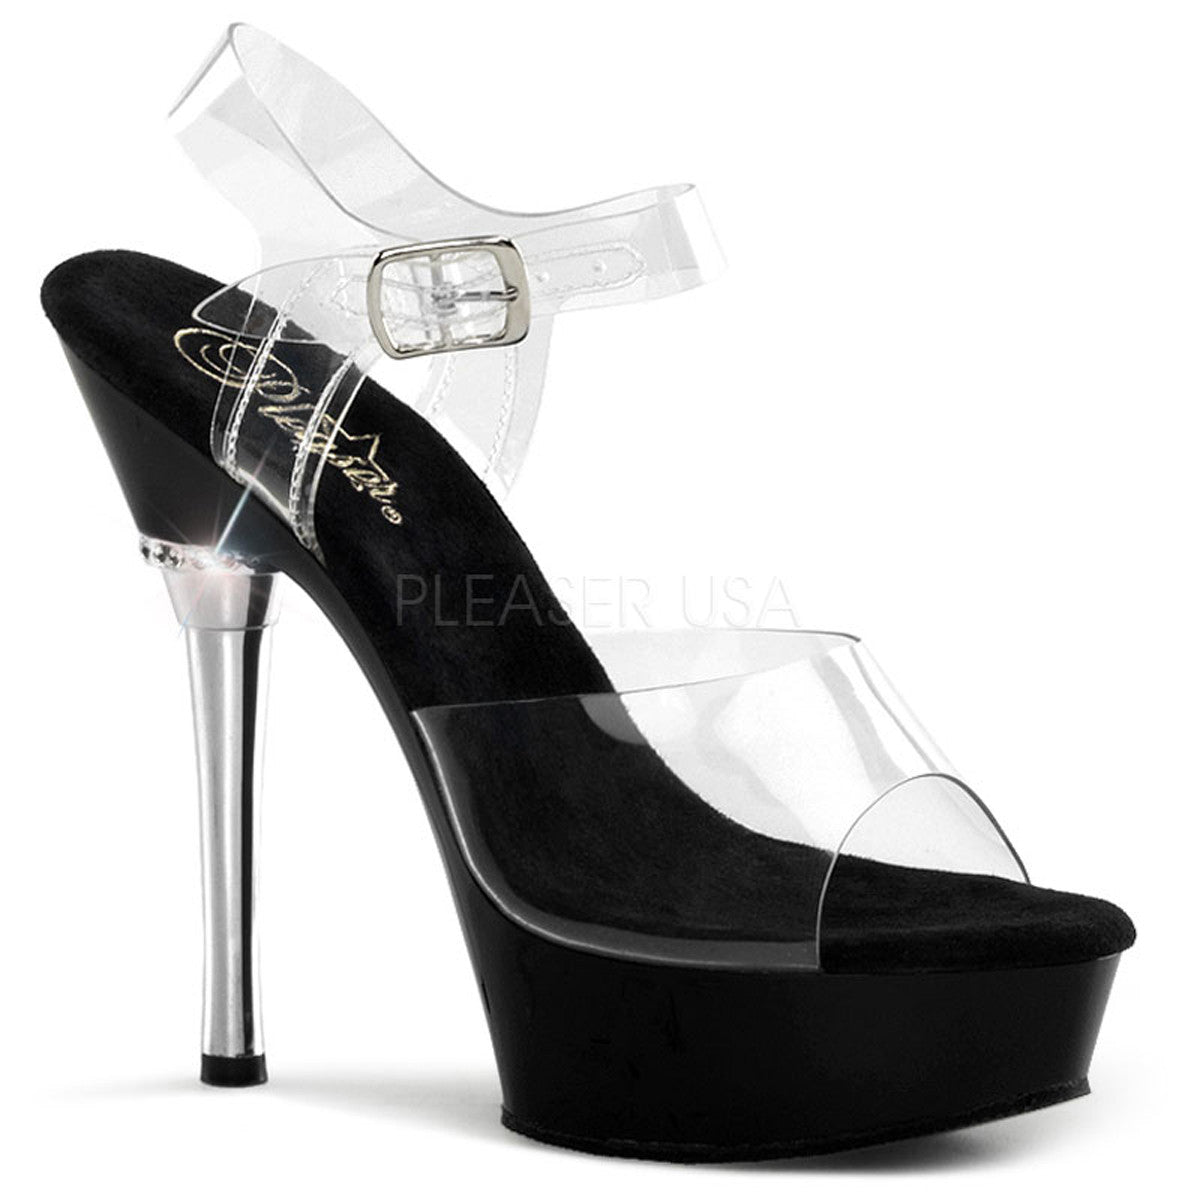 PLEASER ALLURE-608 Clear-Black Stiletto Sandals - Shoecup.com - 1